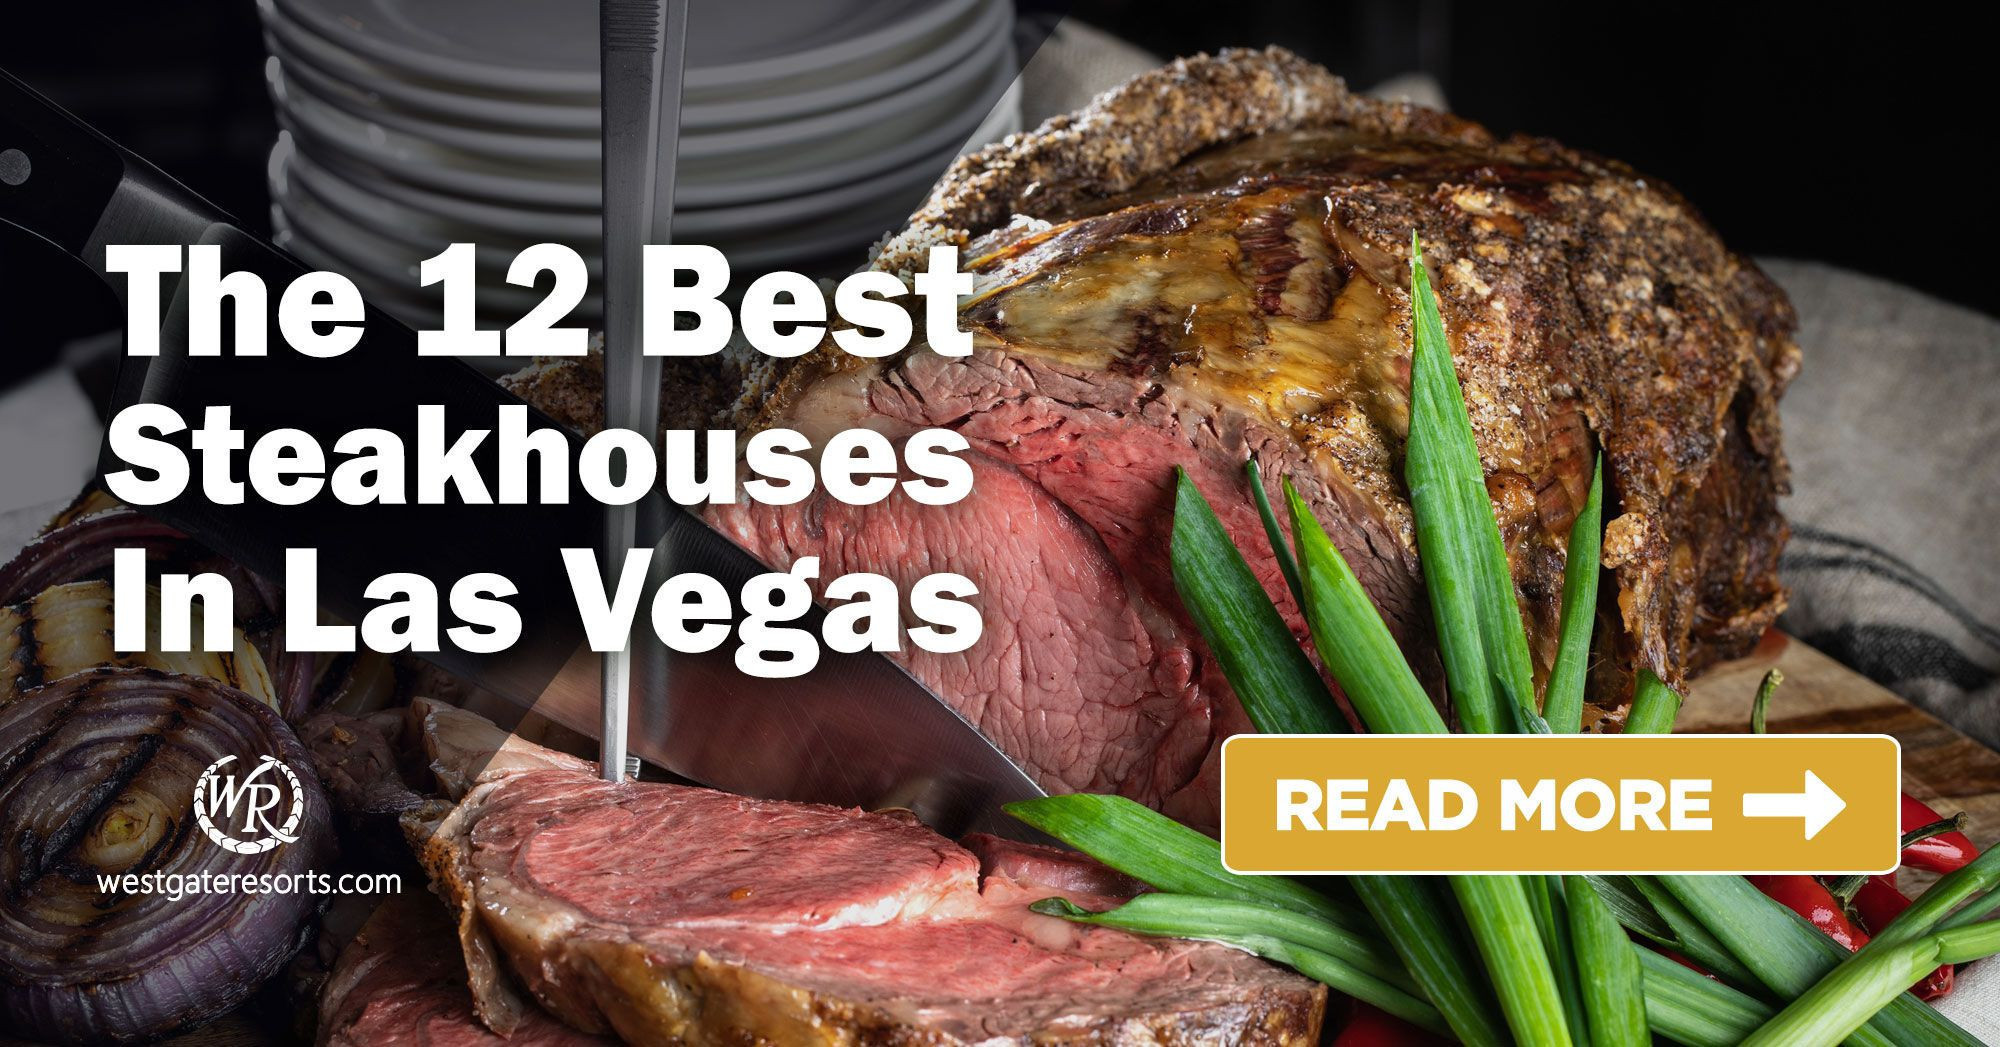 The 12 Best Steakhouses in Las Vegas